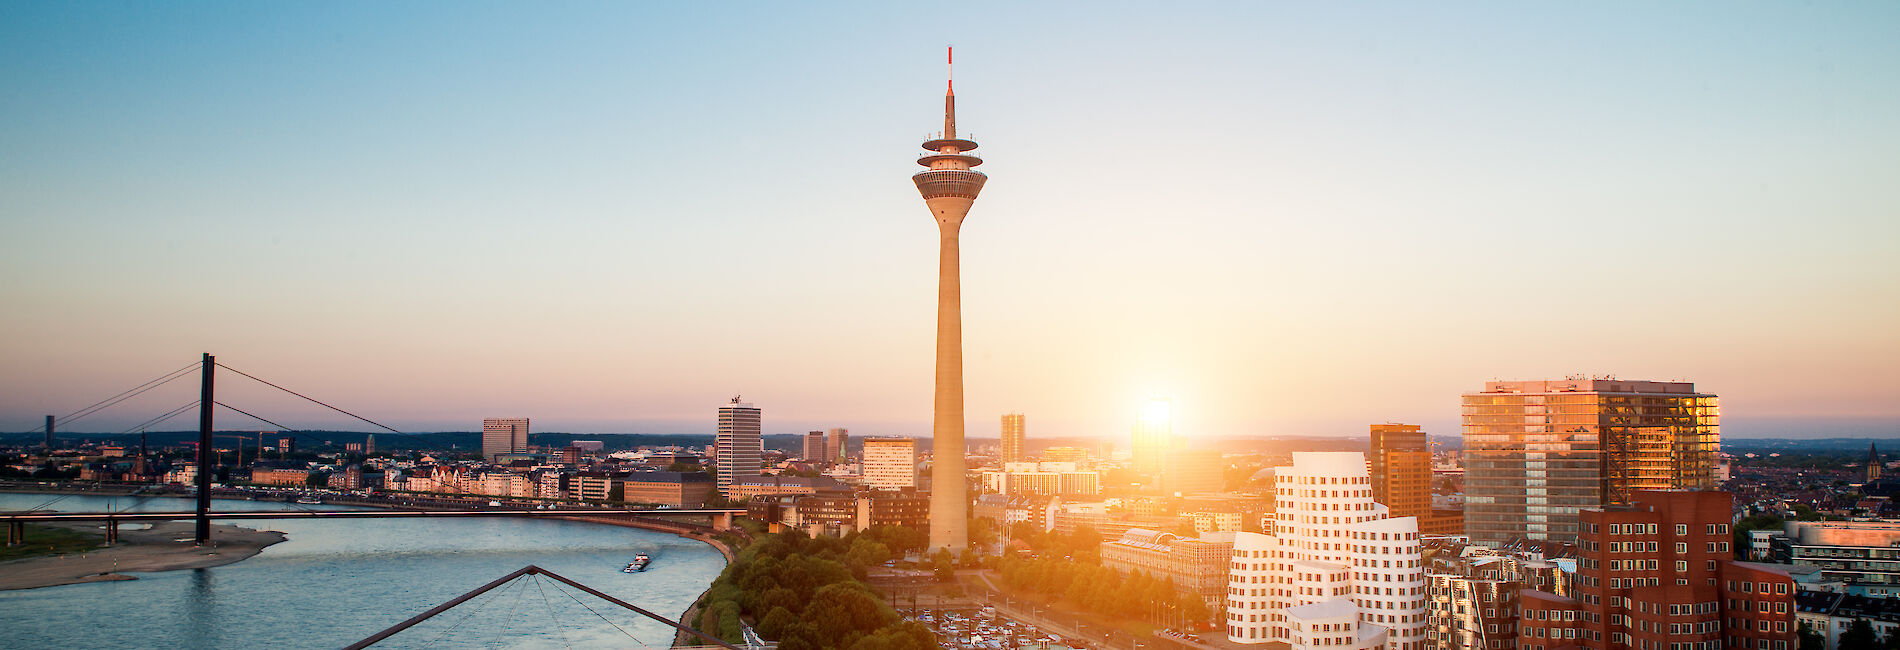 City panorama Düsseldorf with the river Rhine at sunset